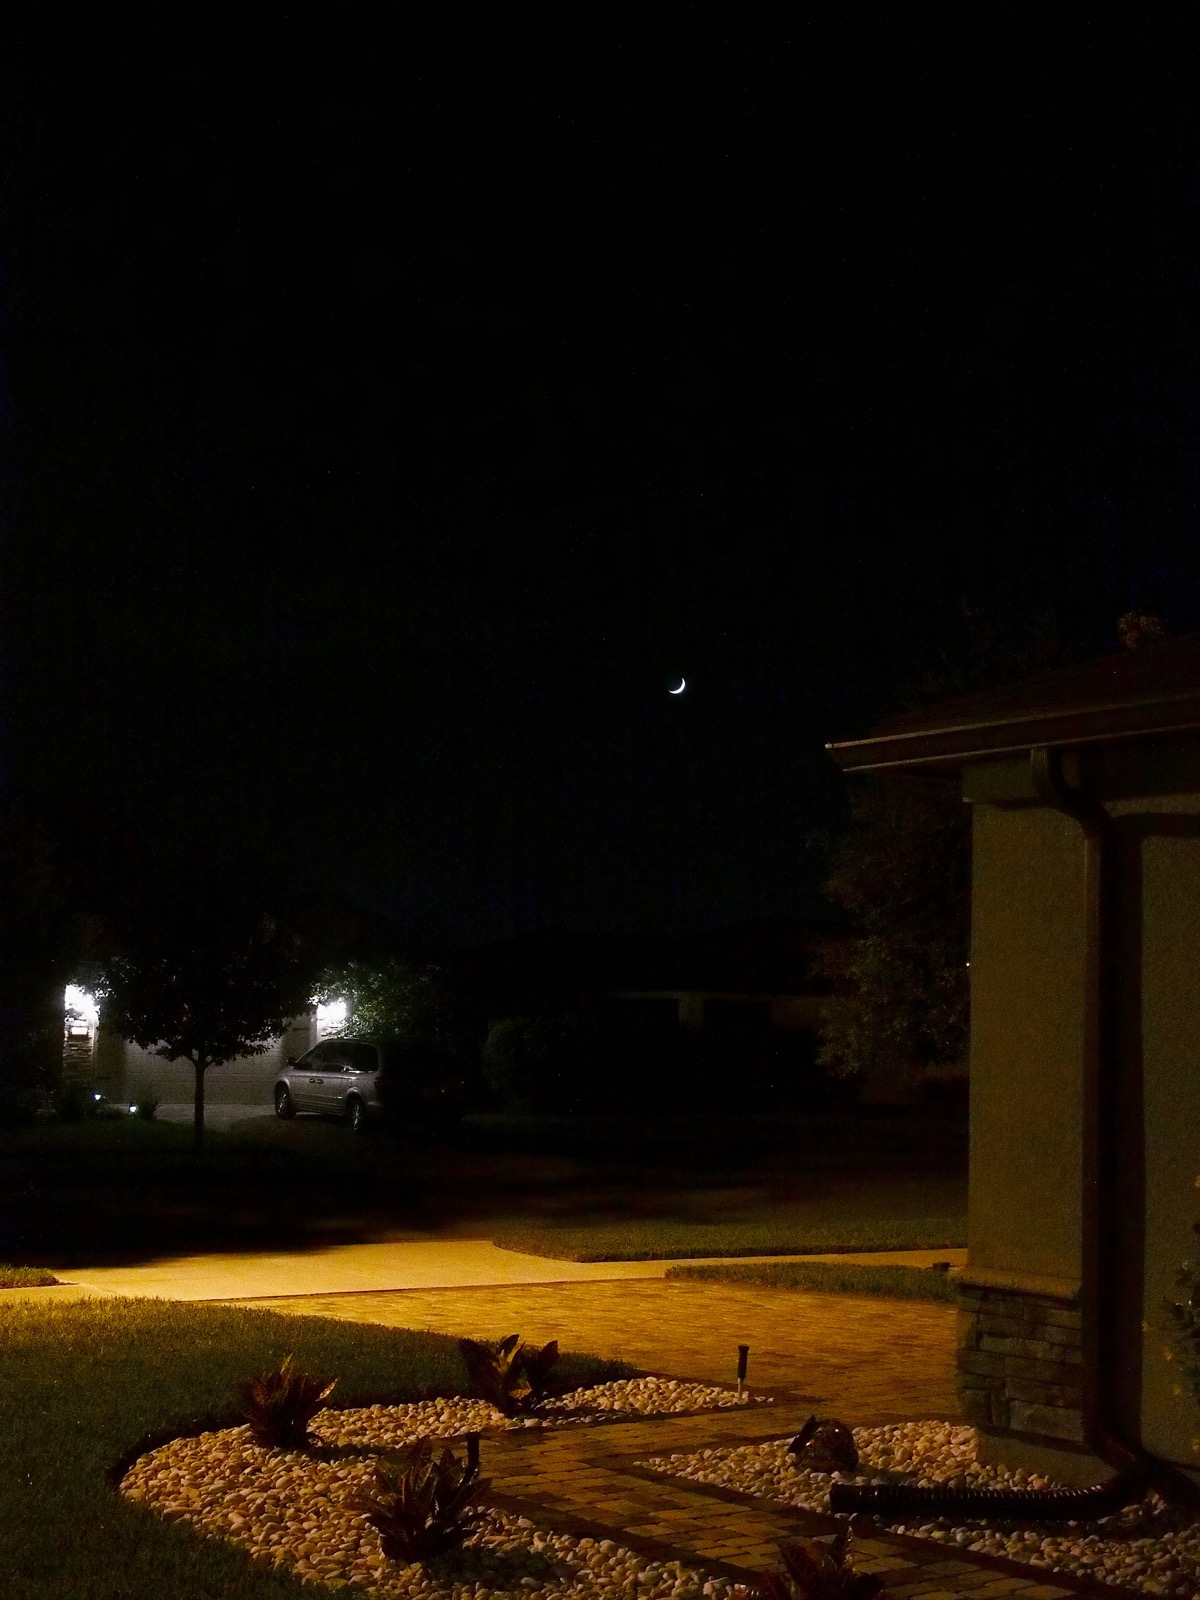 Crescent moon low over a dark suburban landscape